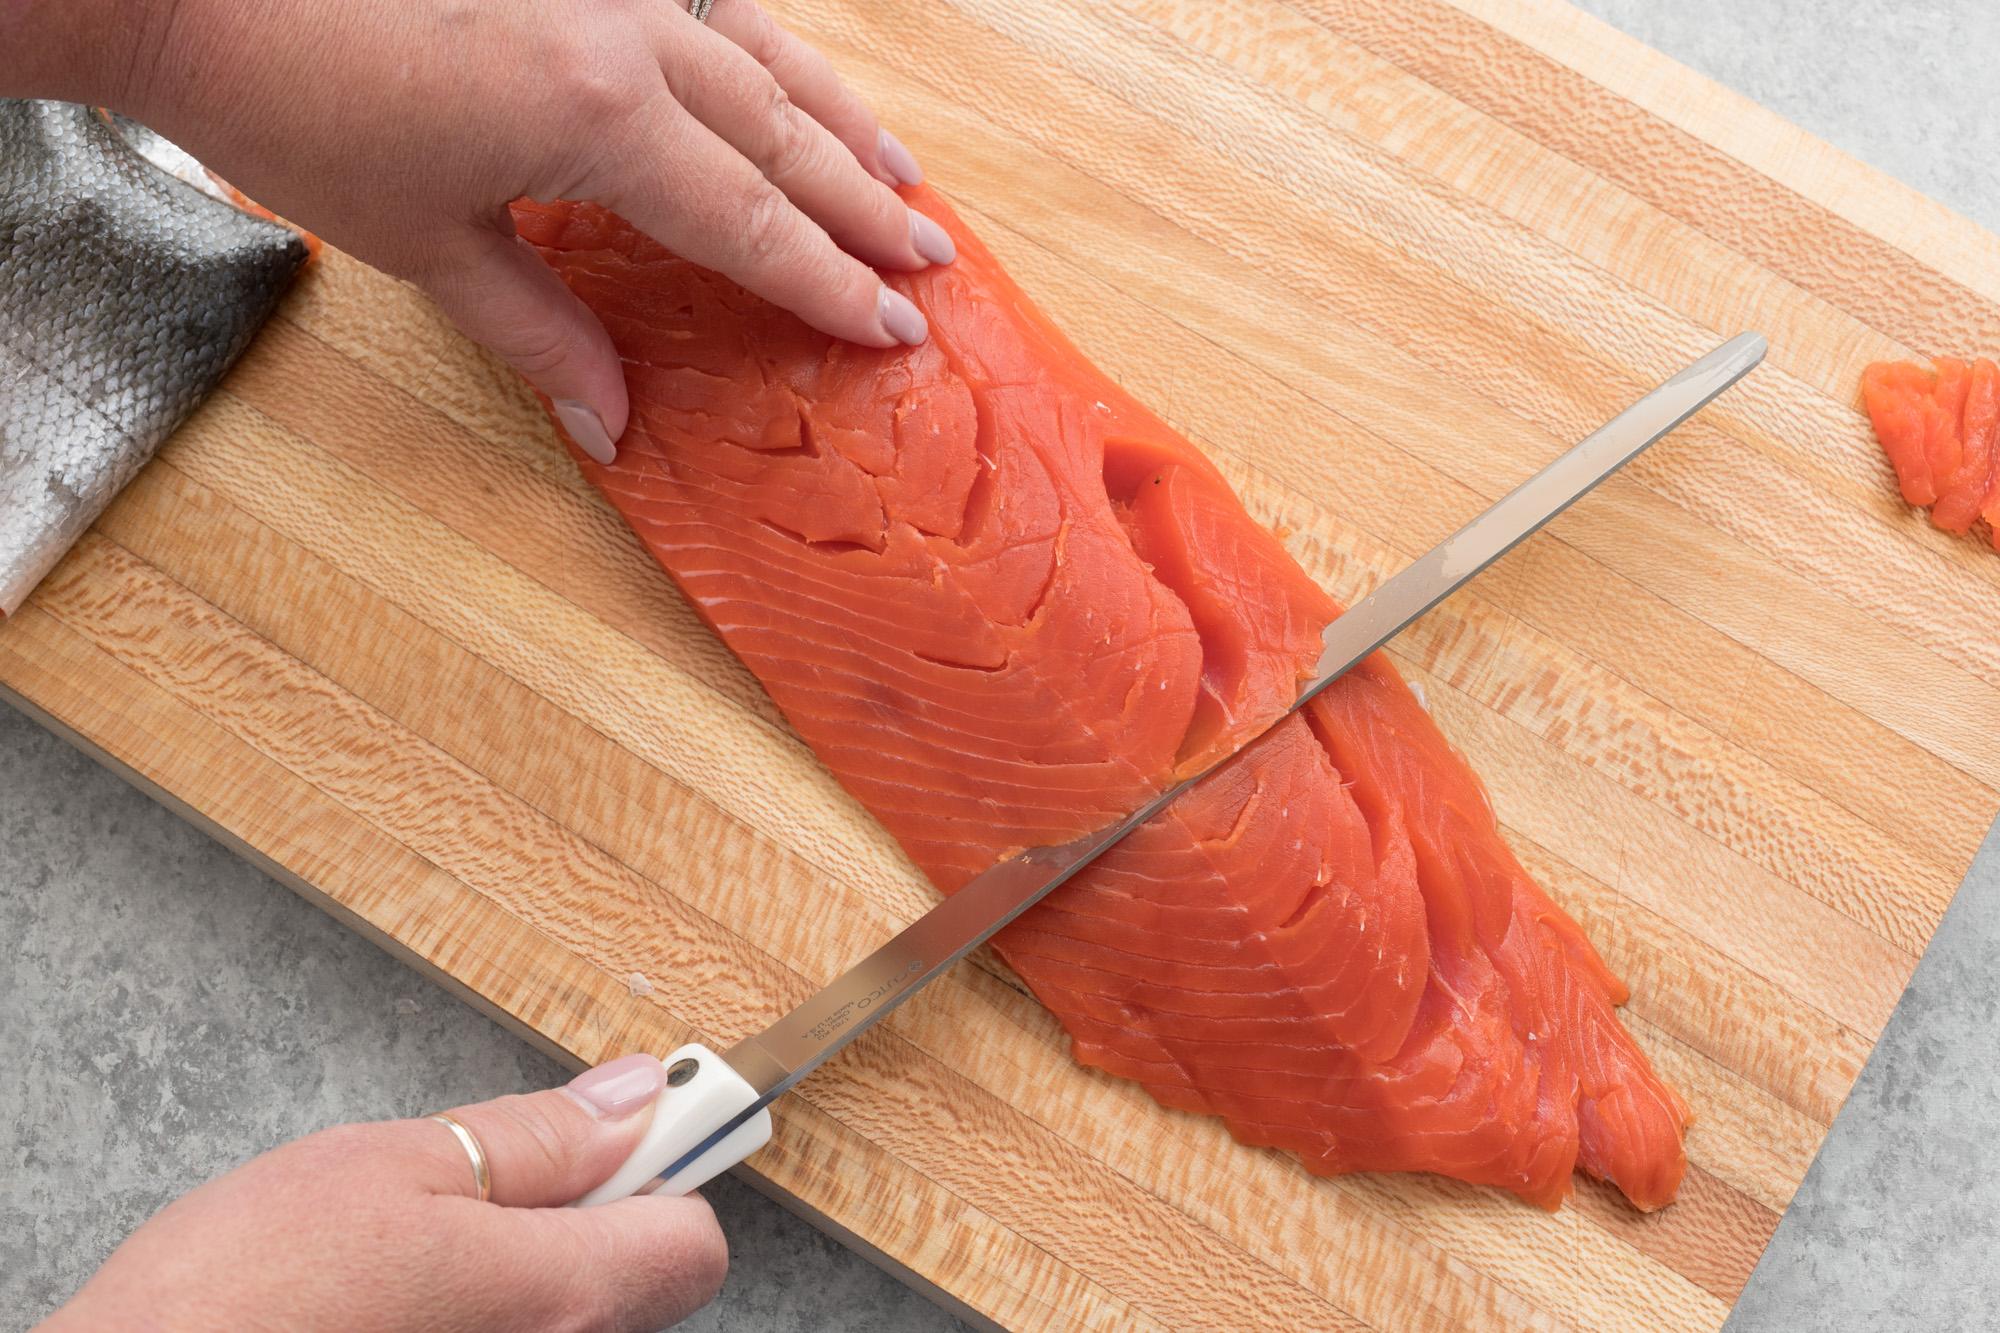 Preparing the Salmon.